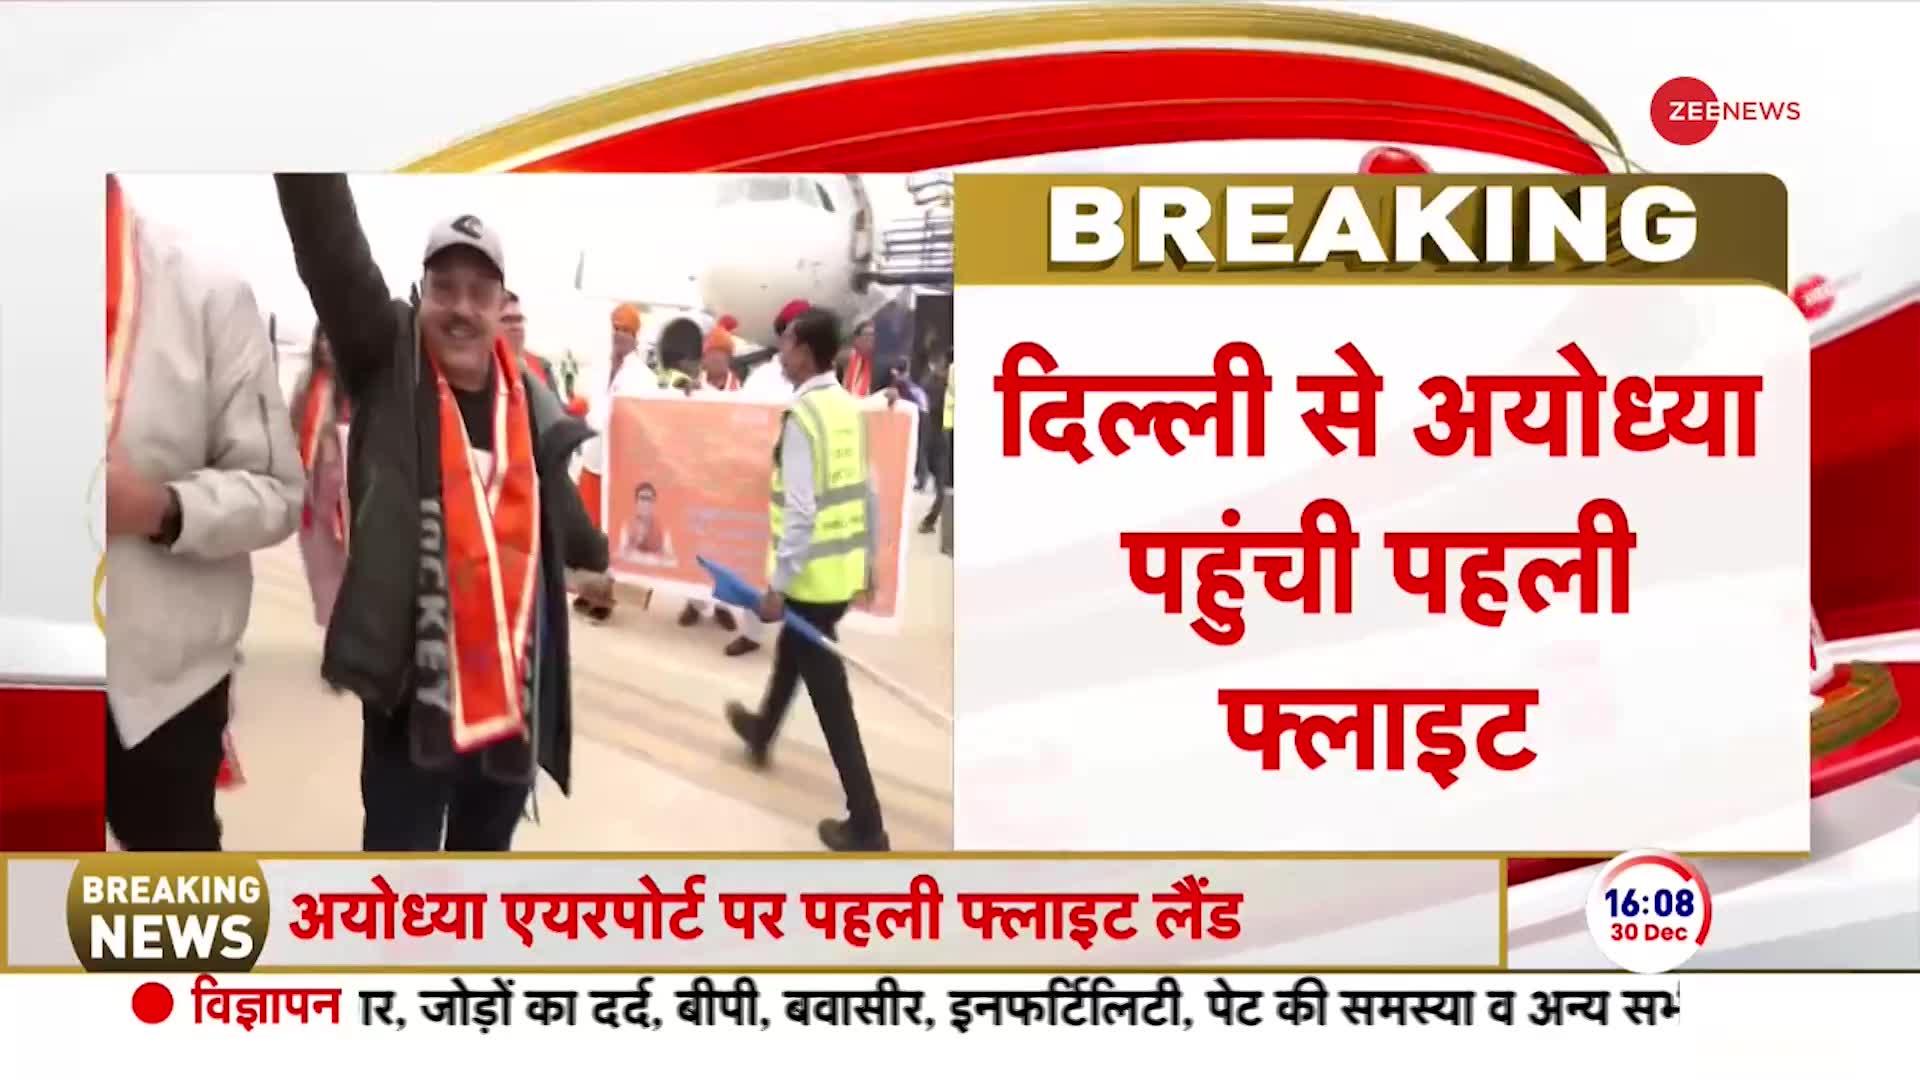 PM Modi Ayodhya Visit: दिल्ली से अयोध्या की पहली फ्लाइट थोड़ी देर पहले पहुंची | Ayodhya Airport Inauguration